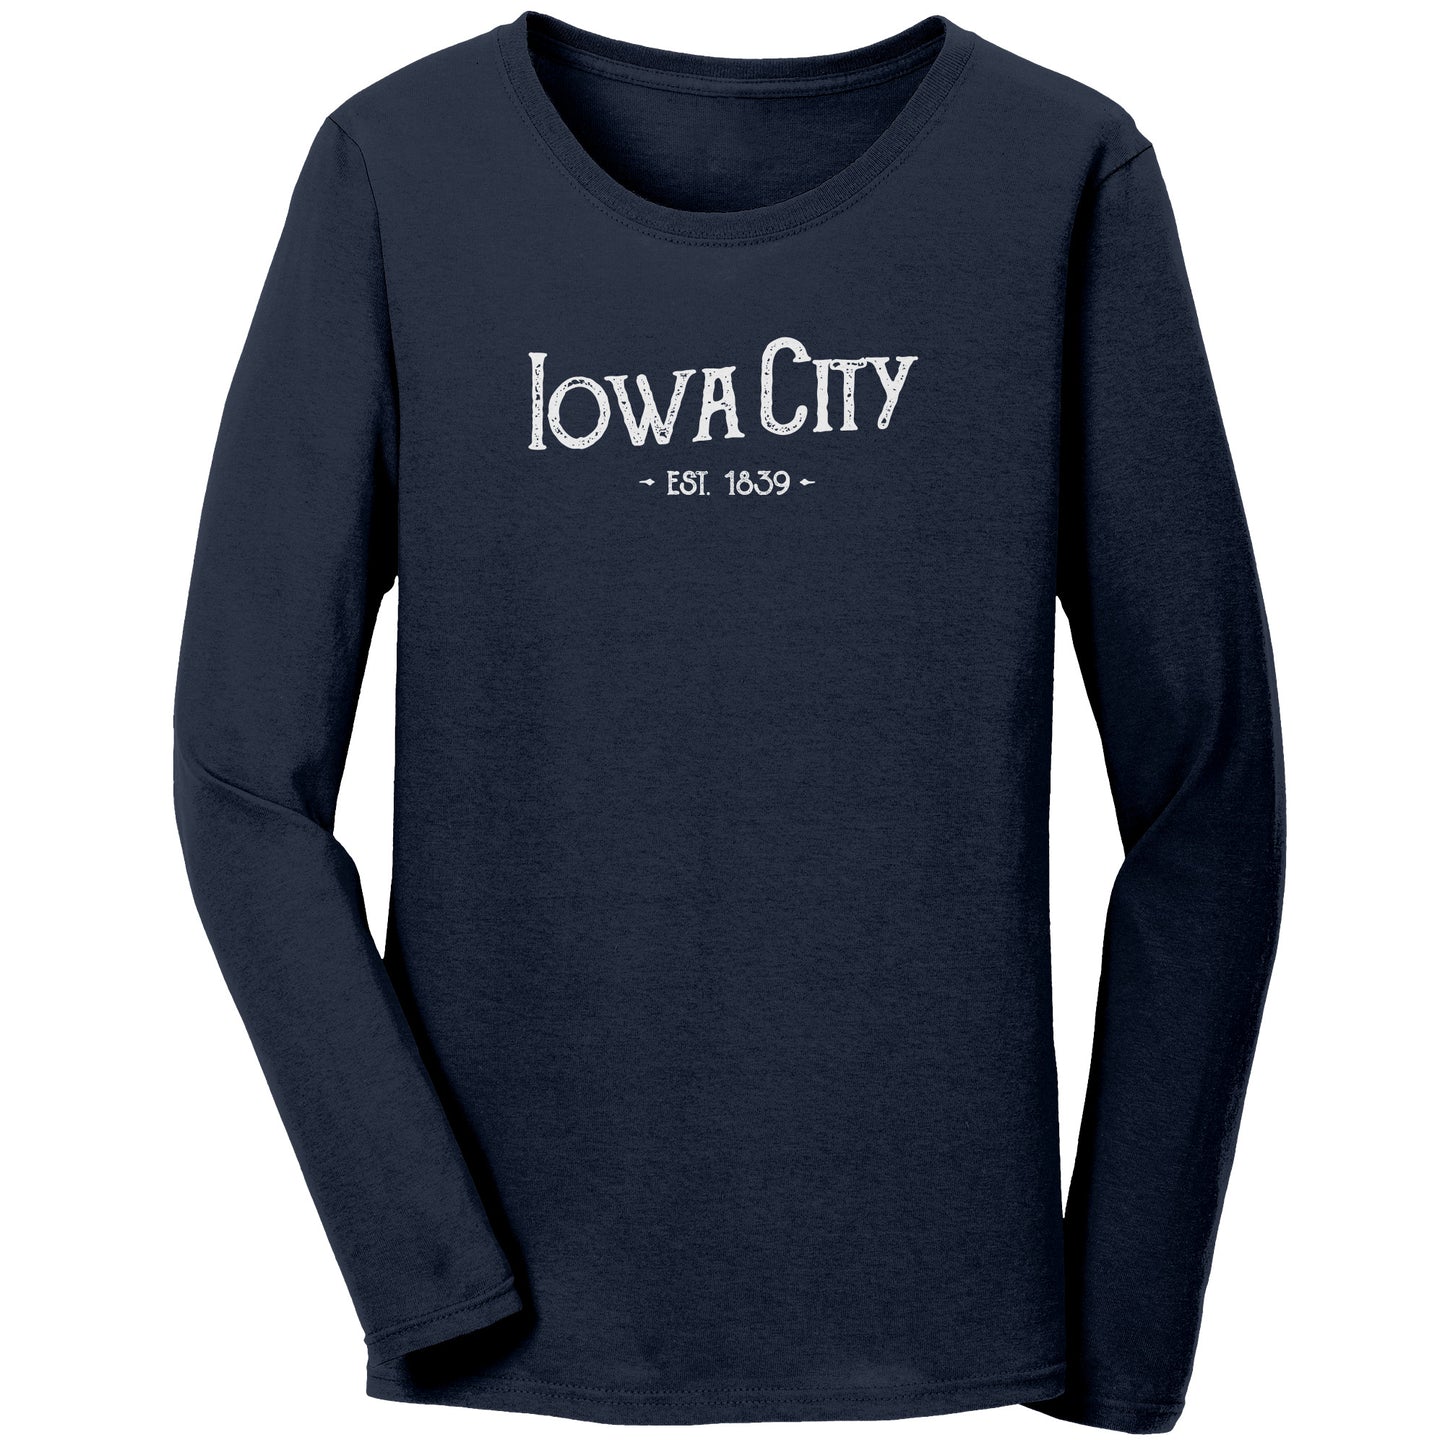 Iowa City Jersey Long Sleeve Women's T-Shirt